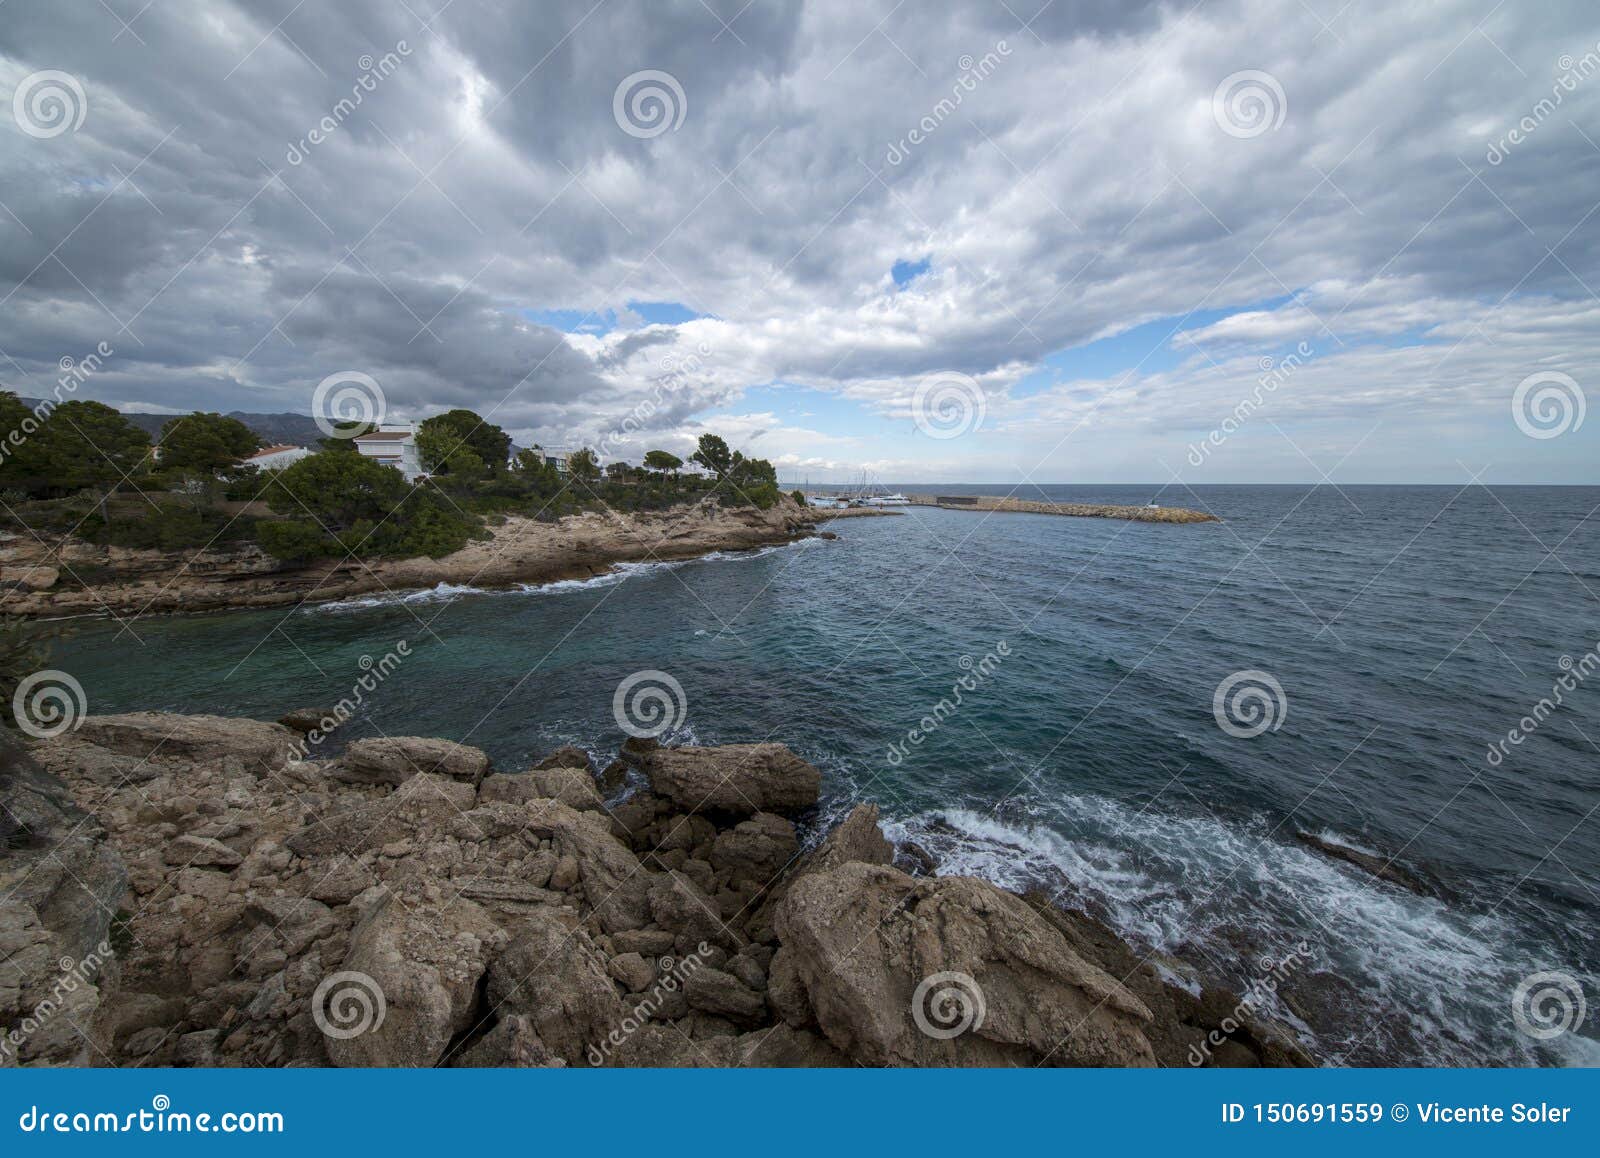 the sea in calafat on the darted coast of tarragona